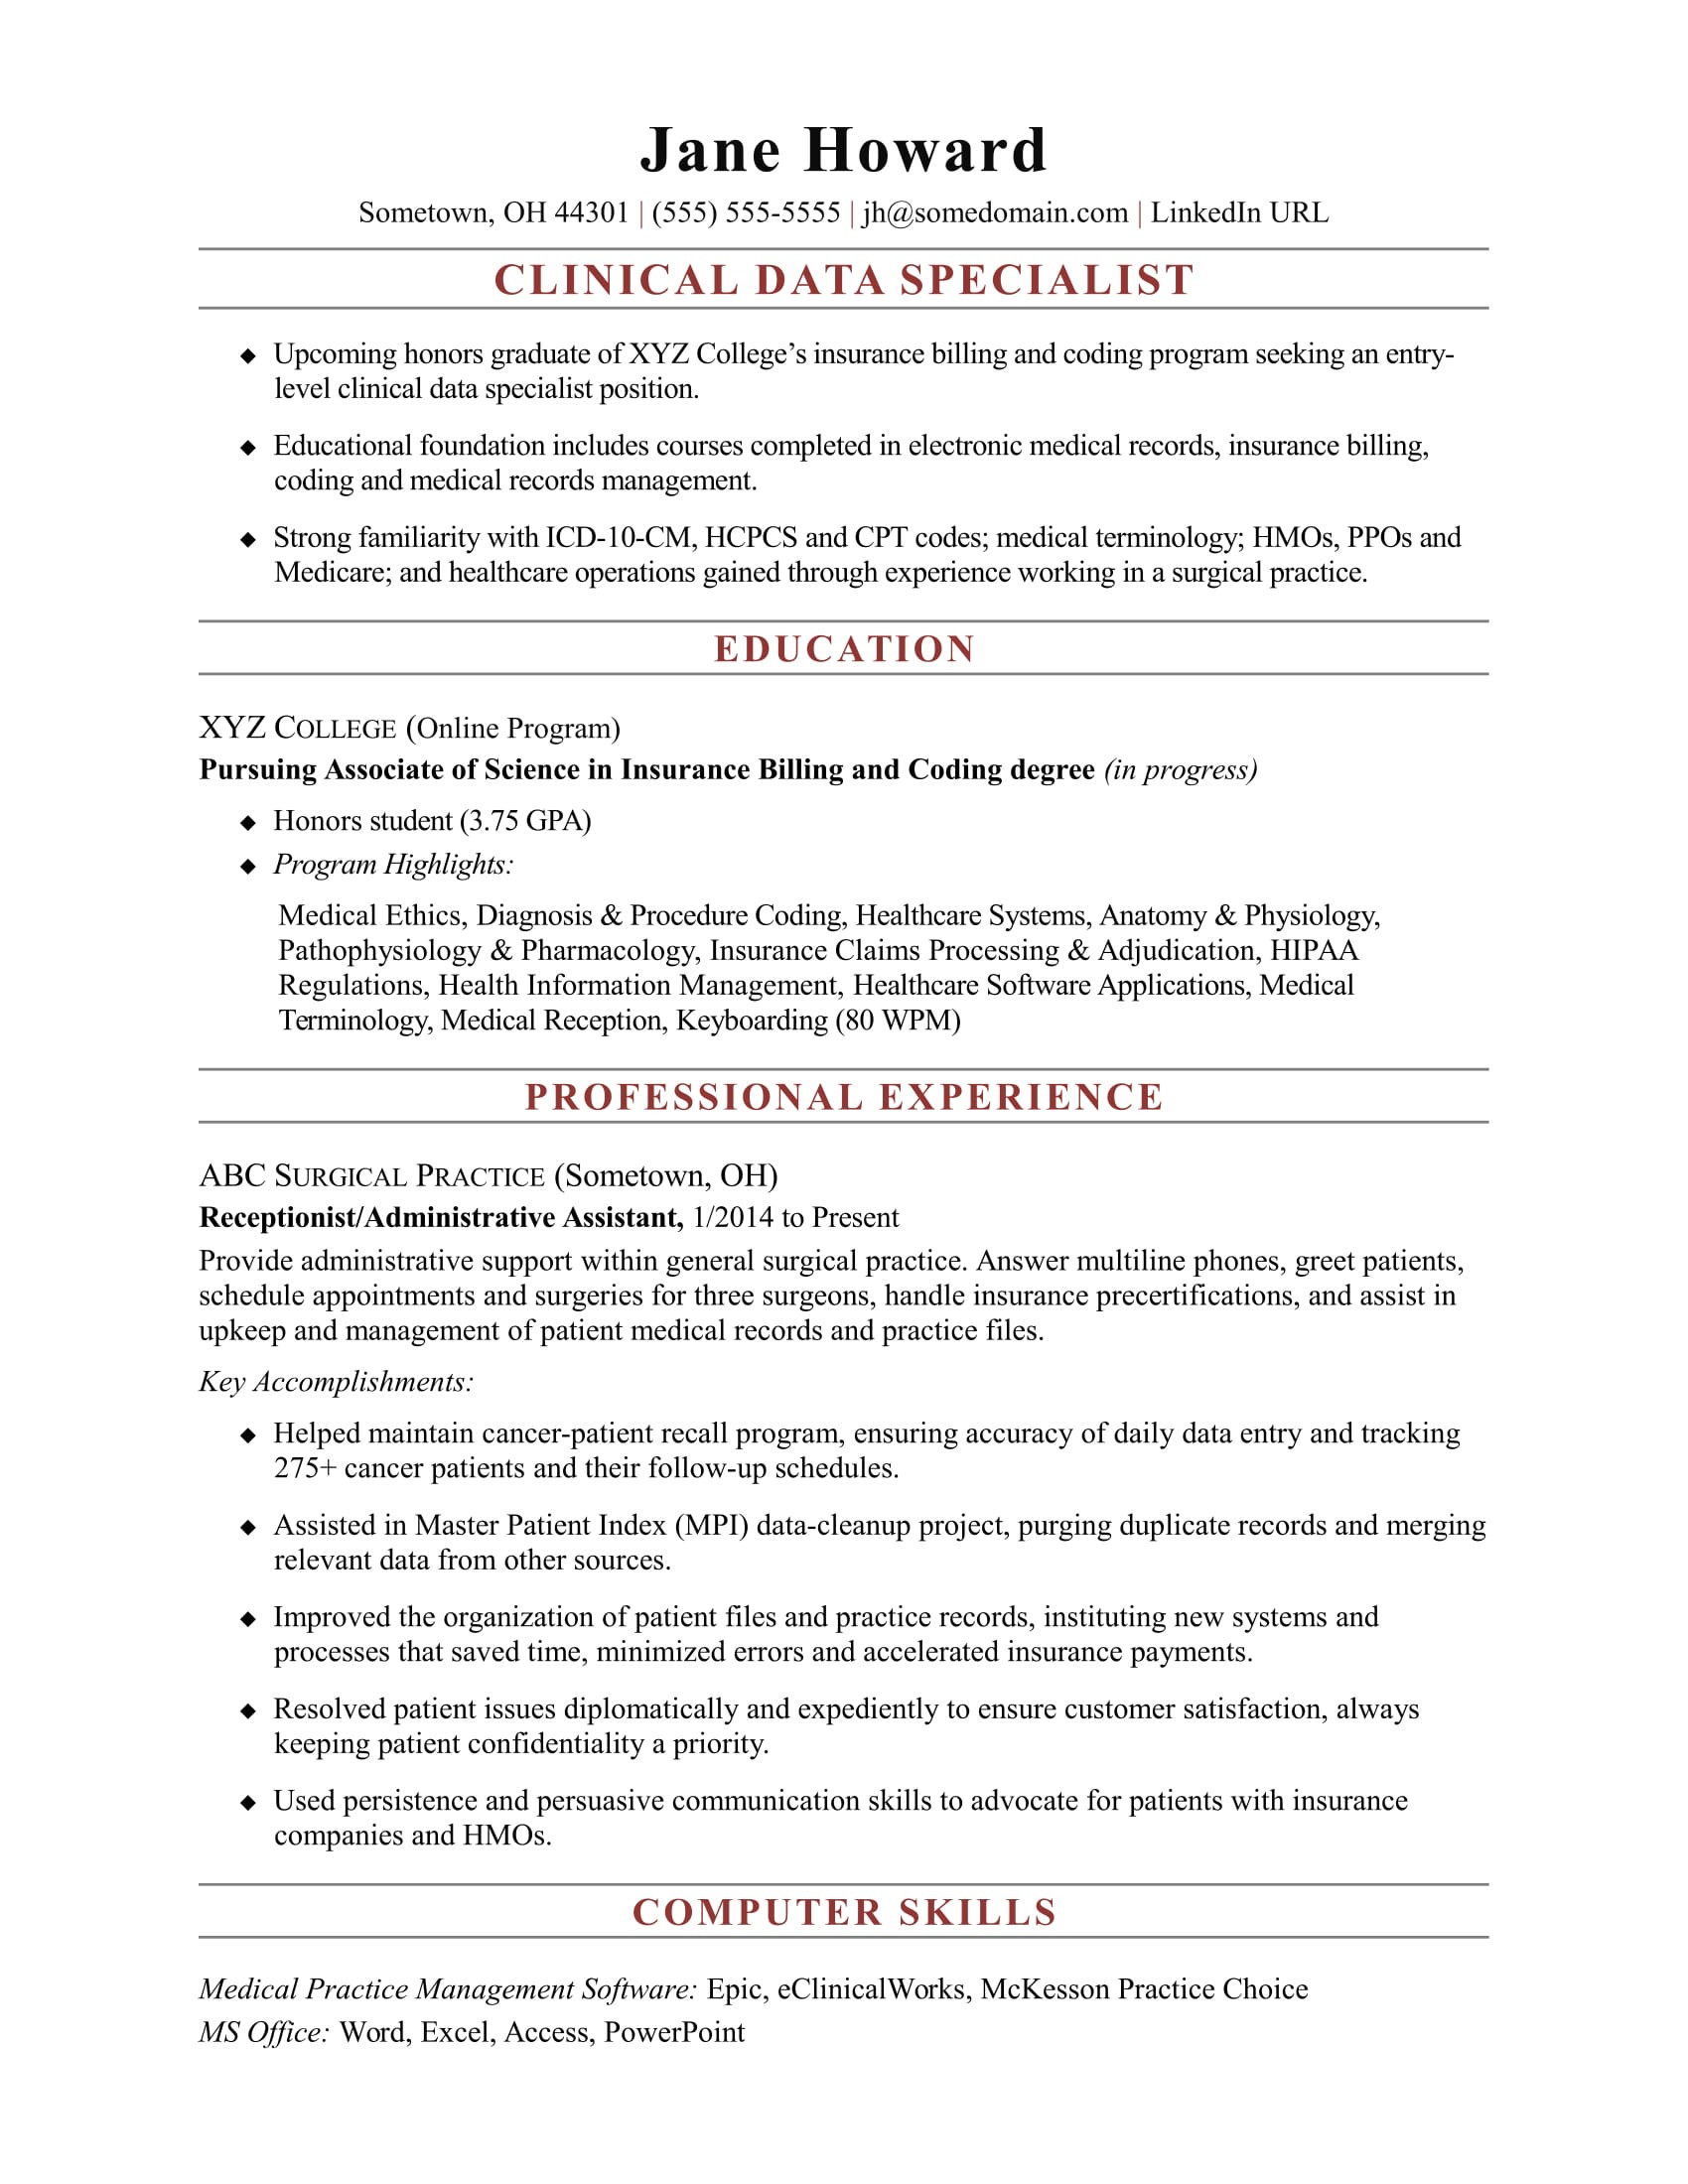 Sample Resume for Entry Level Management Entry-level Clinical Data Specialist Resume Sample Monster.com